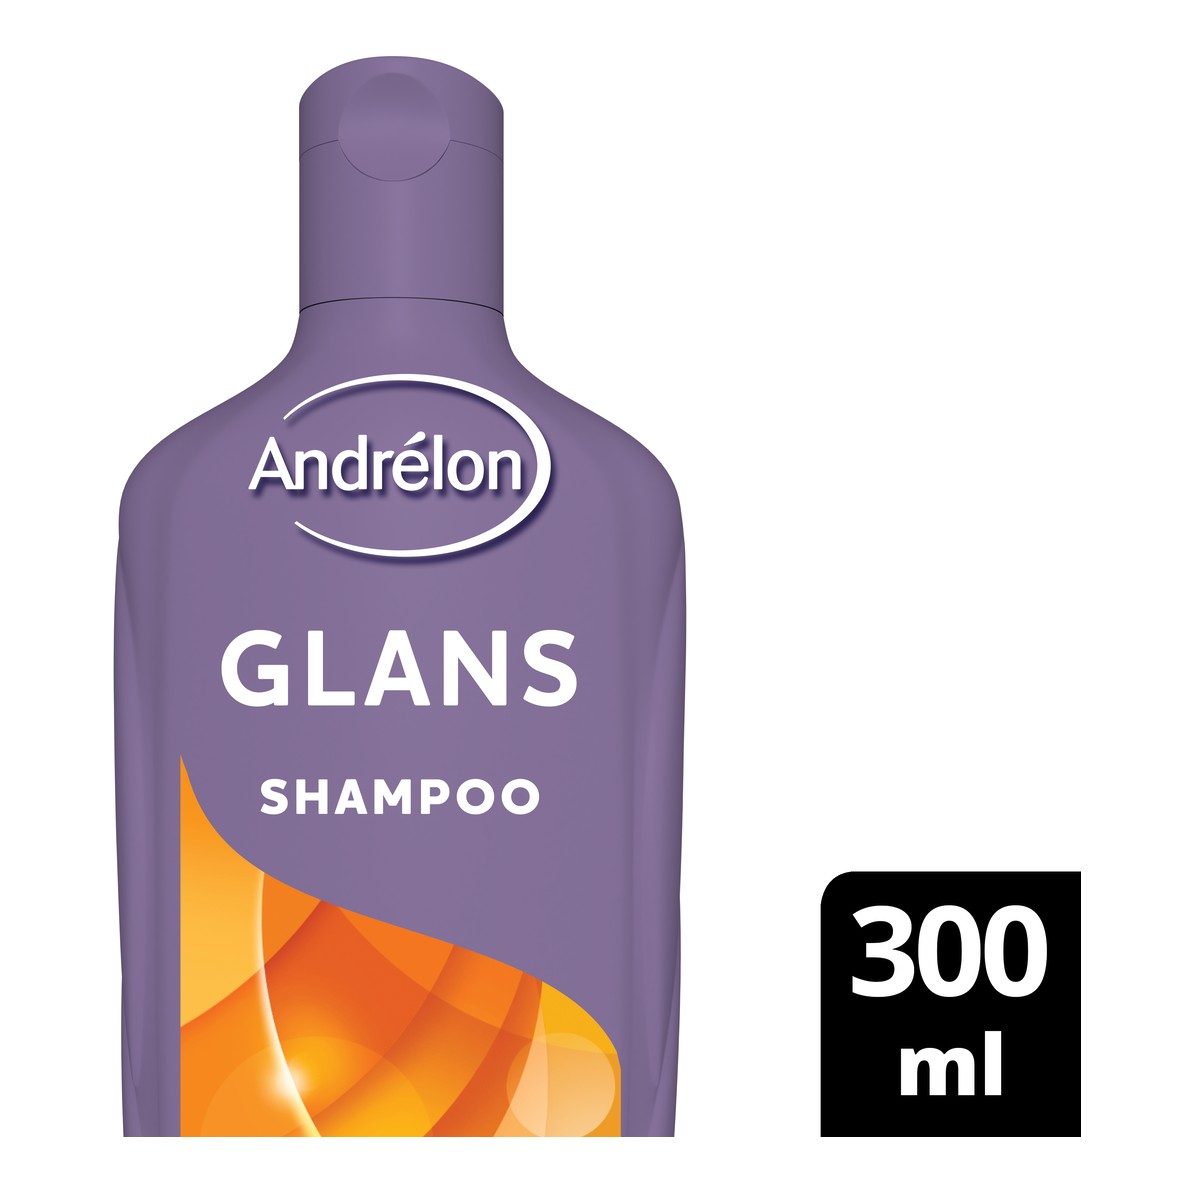 Classic glans shampoo